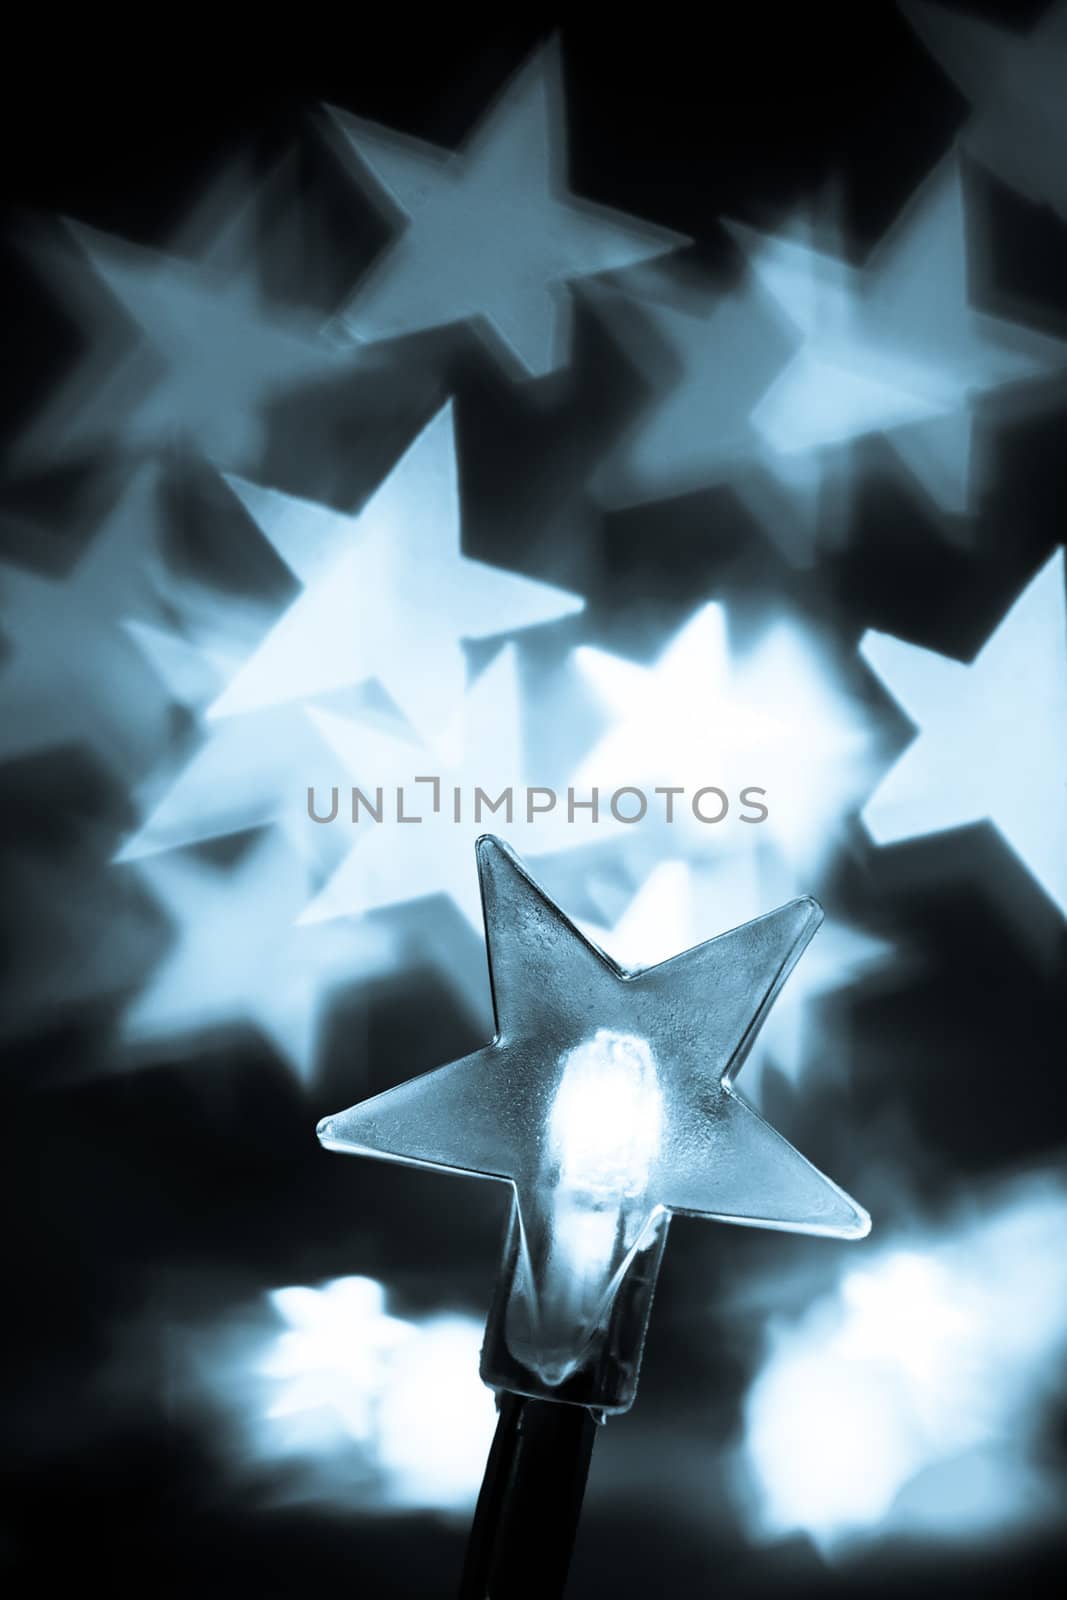 Star shaped Christmas lights, shallow DOF